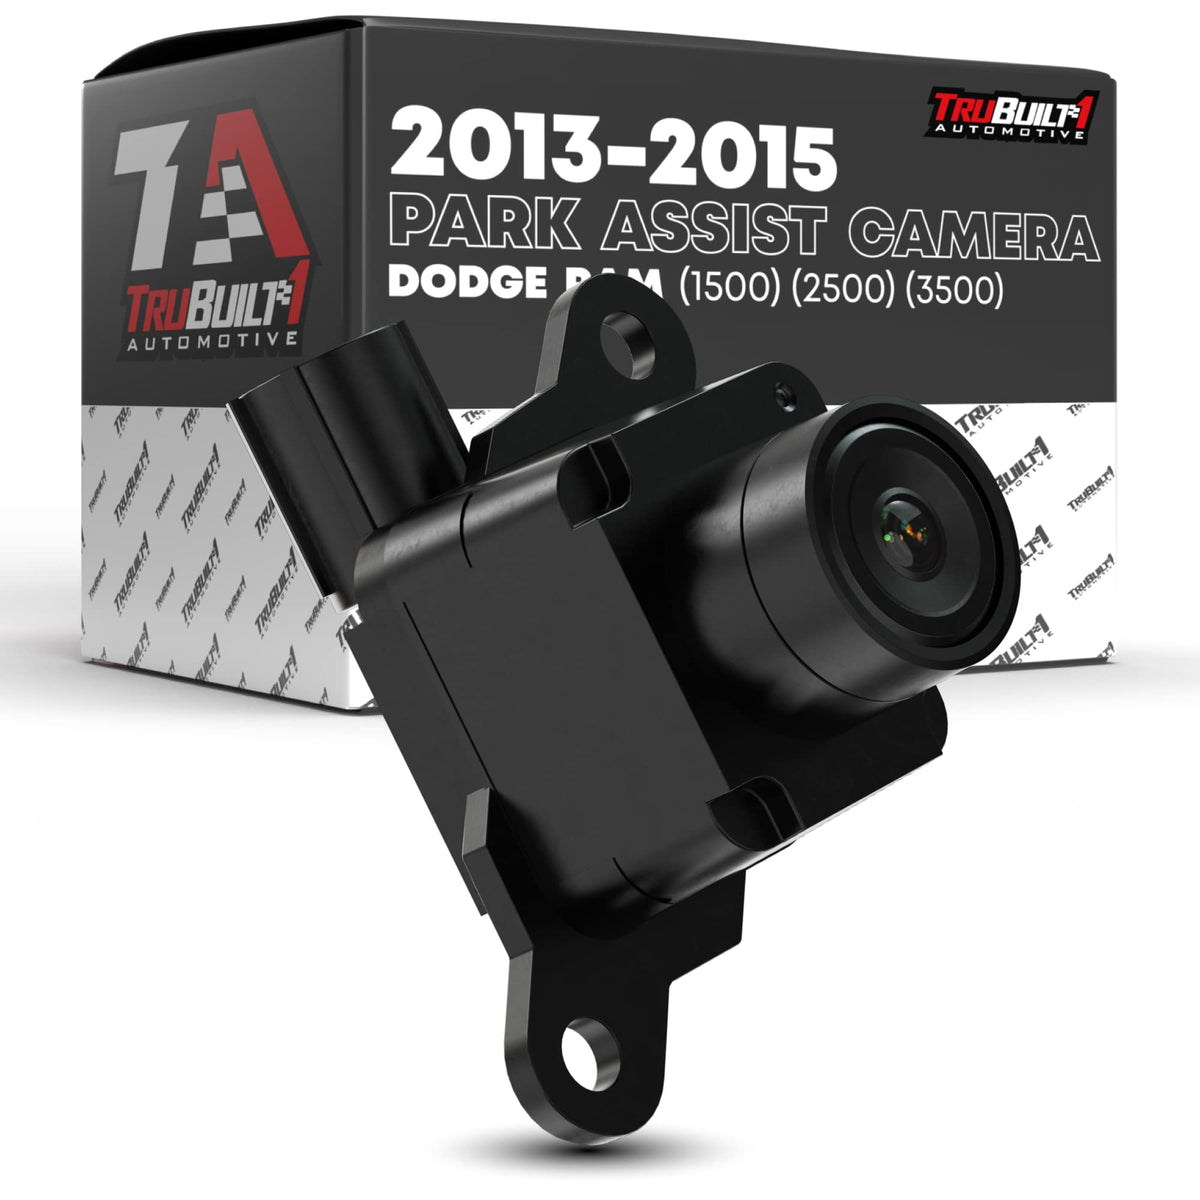 Rear View Backup Camera - Compatible with 2013-2015 Dodge Viper, Ram 1500/2500/3500/4500/5500, 2015 Chrysler 200 - Reverse Park Assist Camera - OEM 56038978AL, 56038978AK, 56038978AJ, 56038978AI